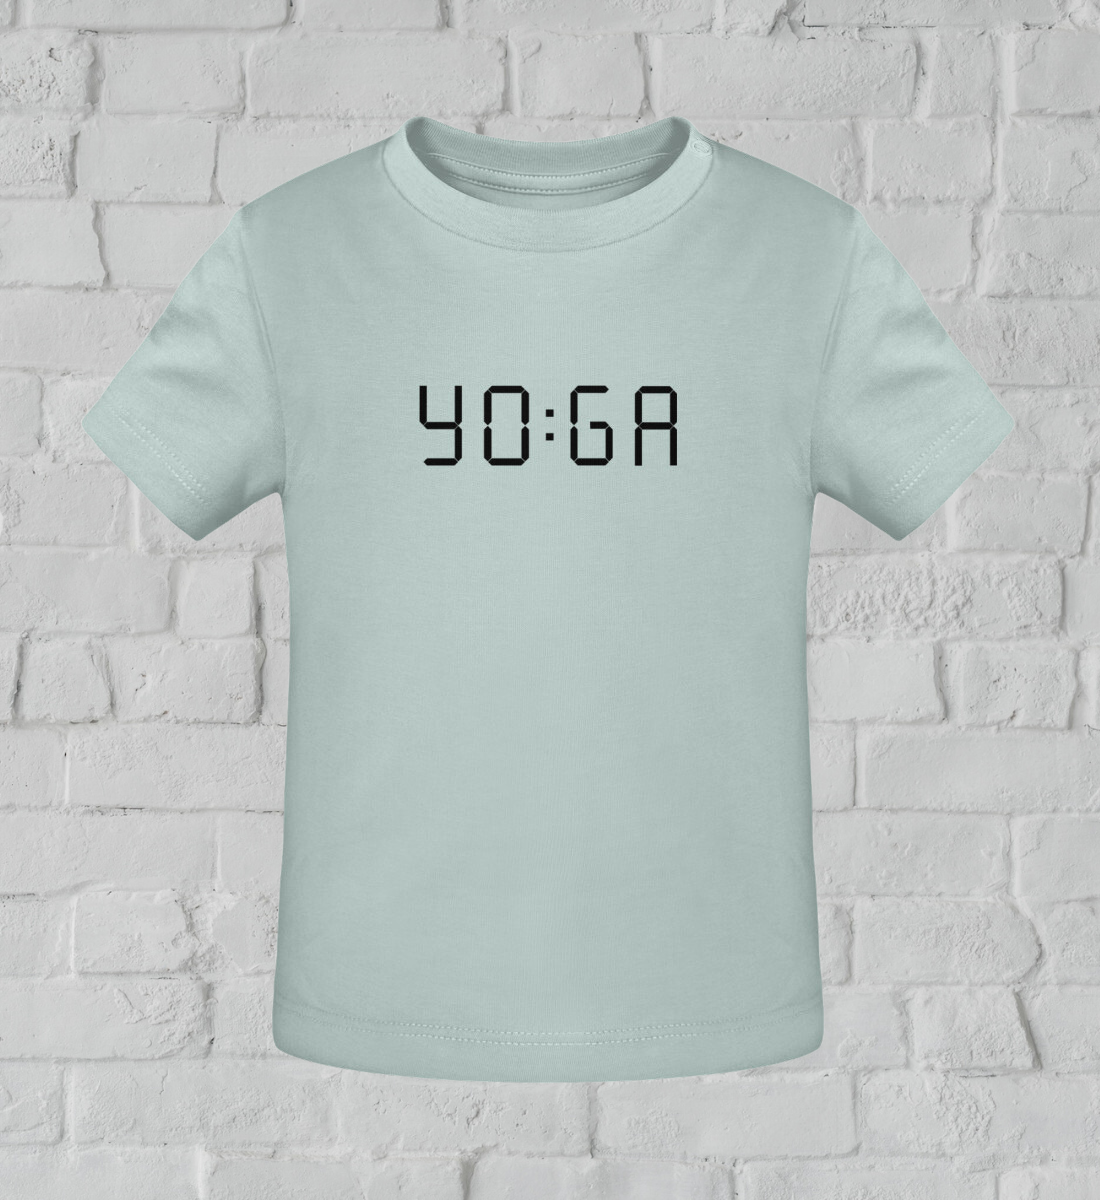 zeit für yoga l yoga shirt kinder hellblau l yoga kleidung kinder l nachhaltige mode für kinder l vegane kinder mode